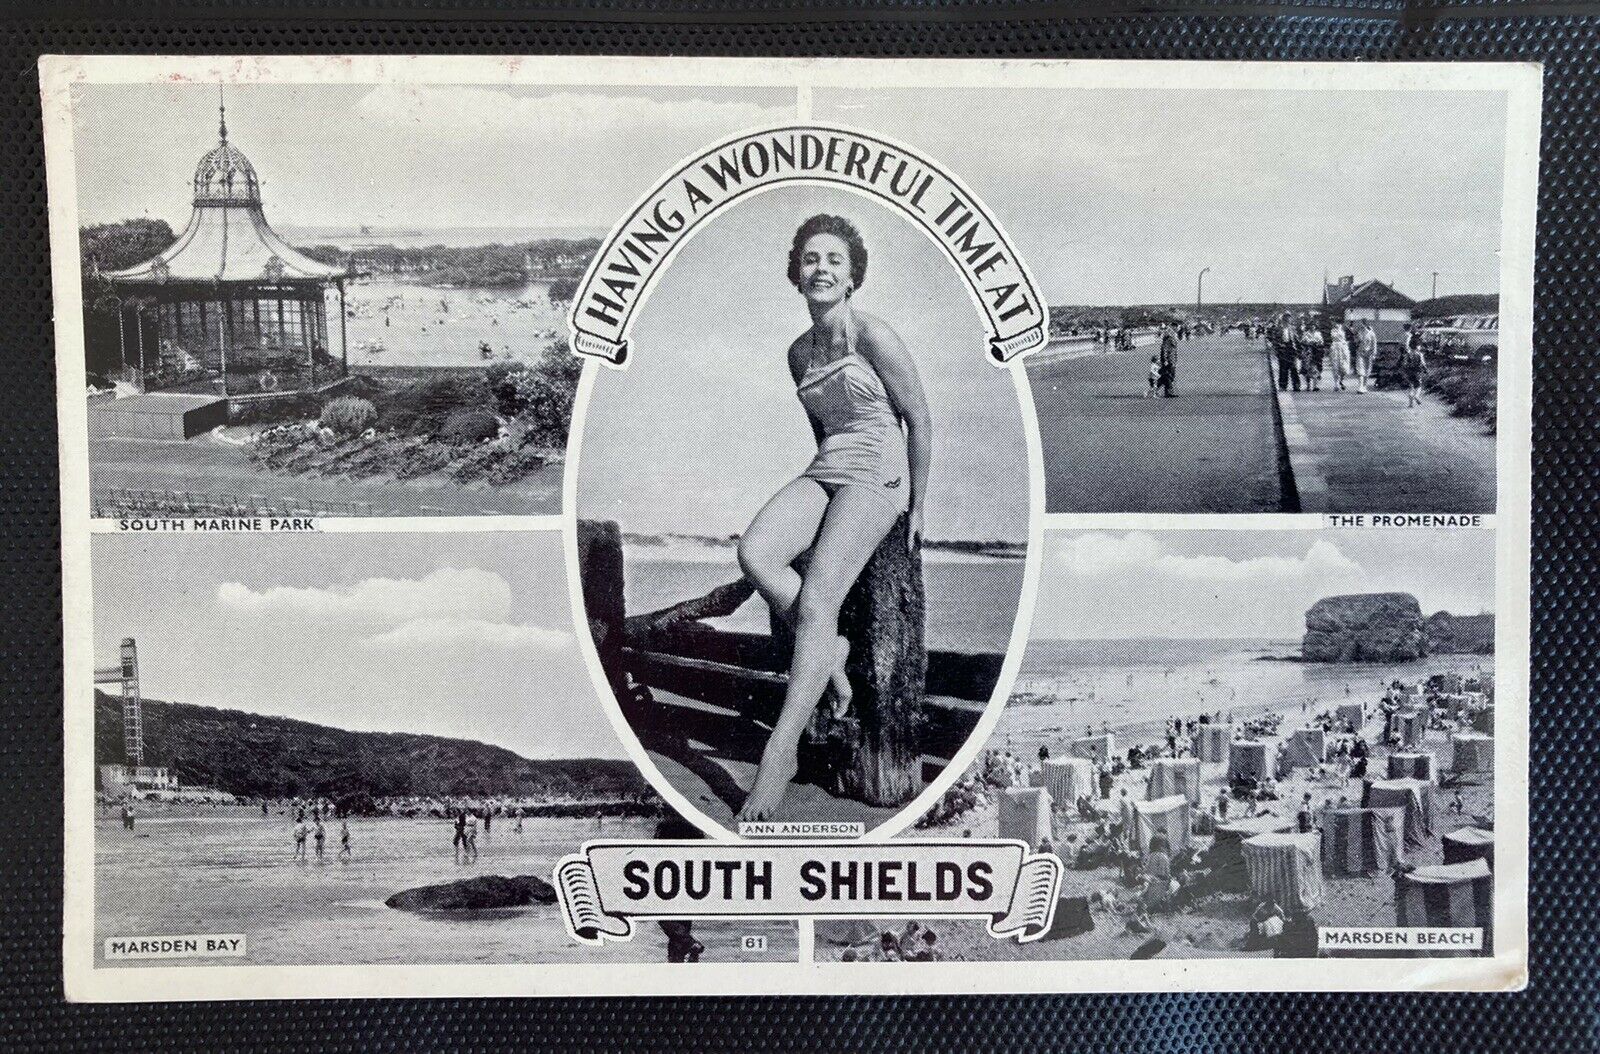 House Clearance - South Shields - Tyne & Wear - Marsden Bay - Park - Beach - A Vintage Service